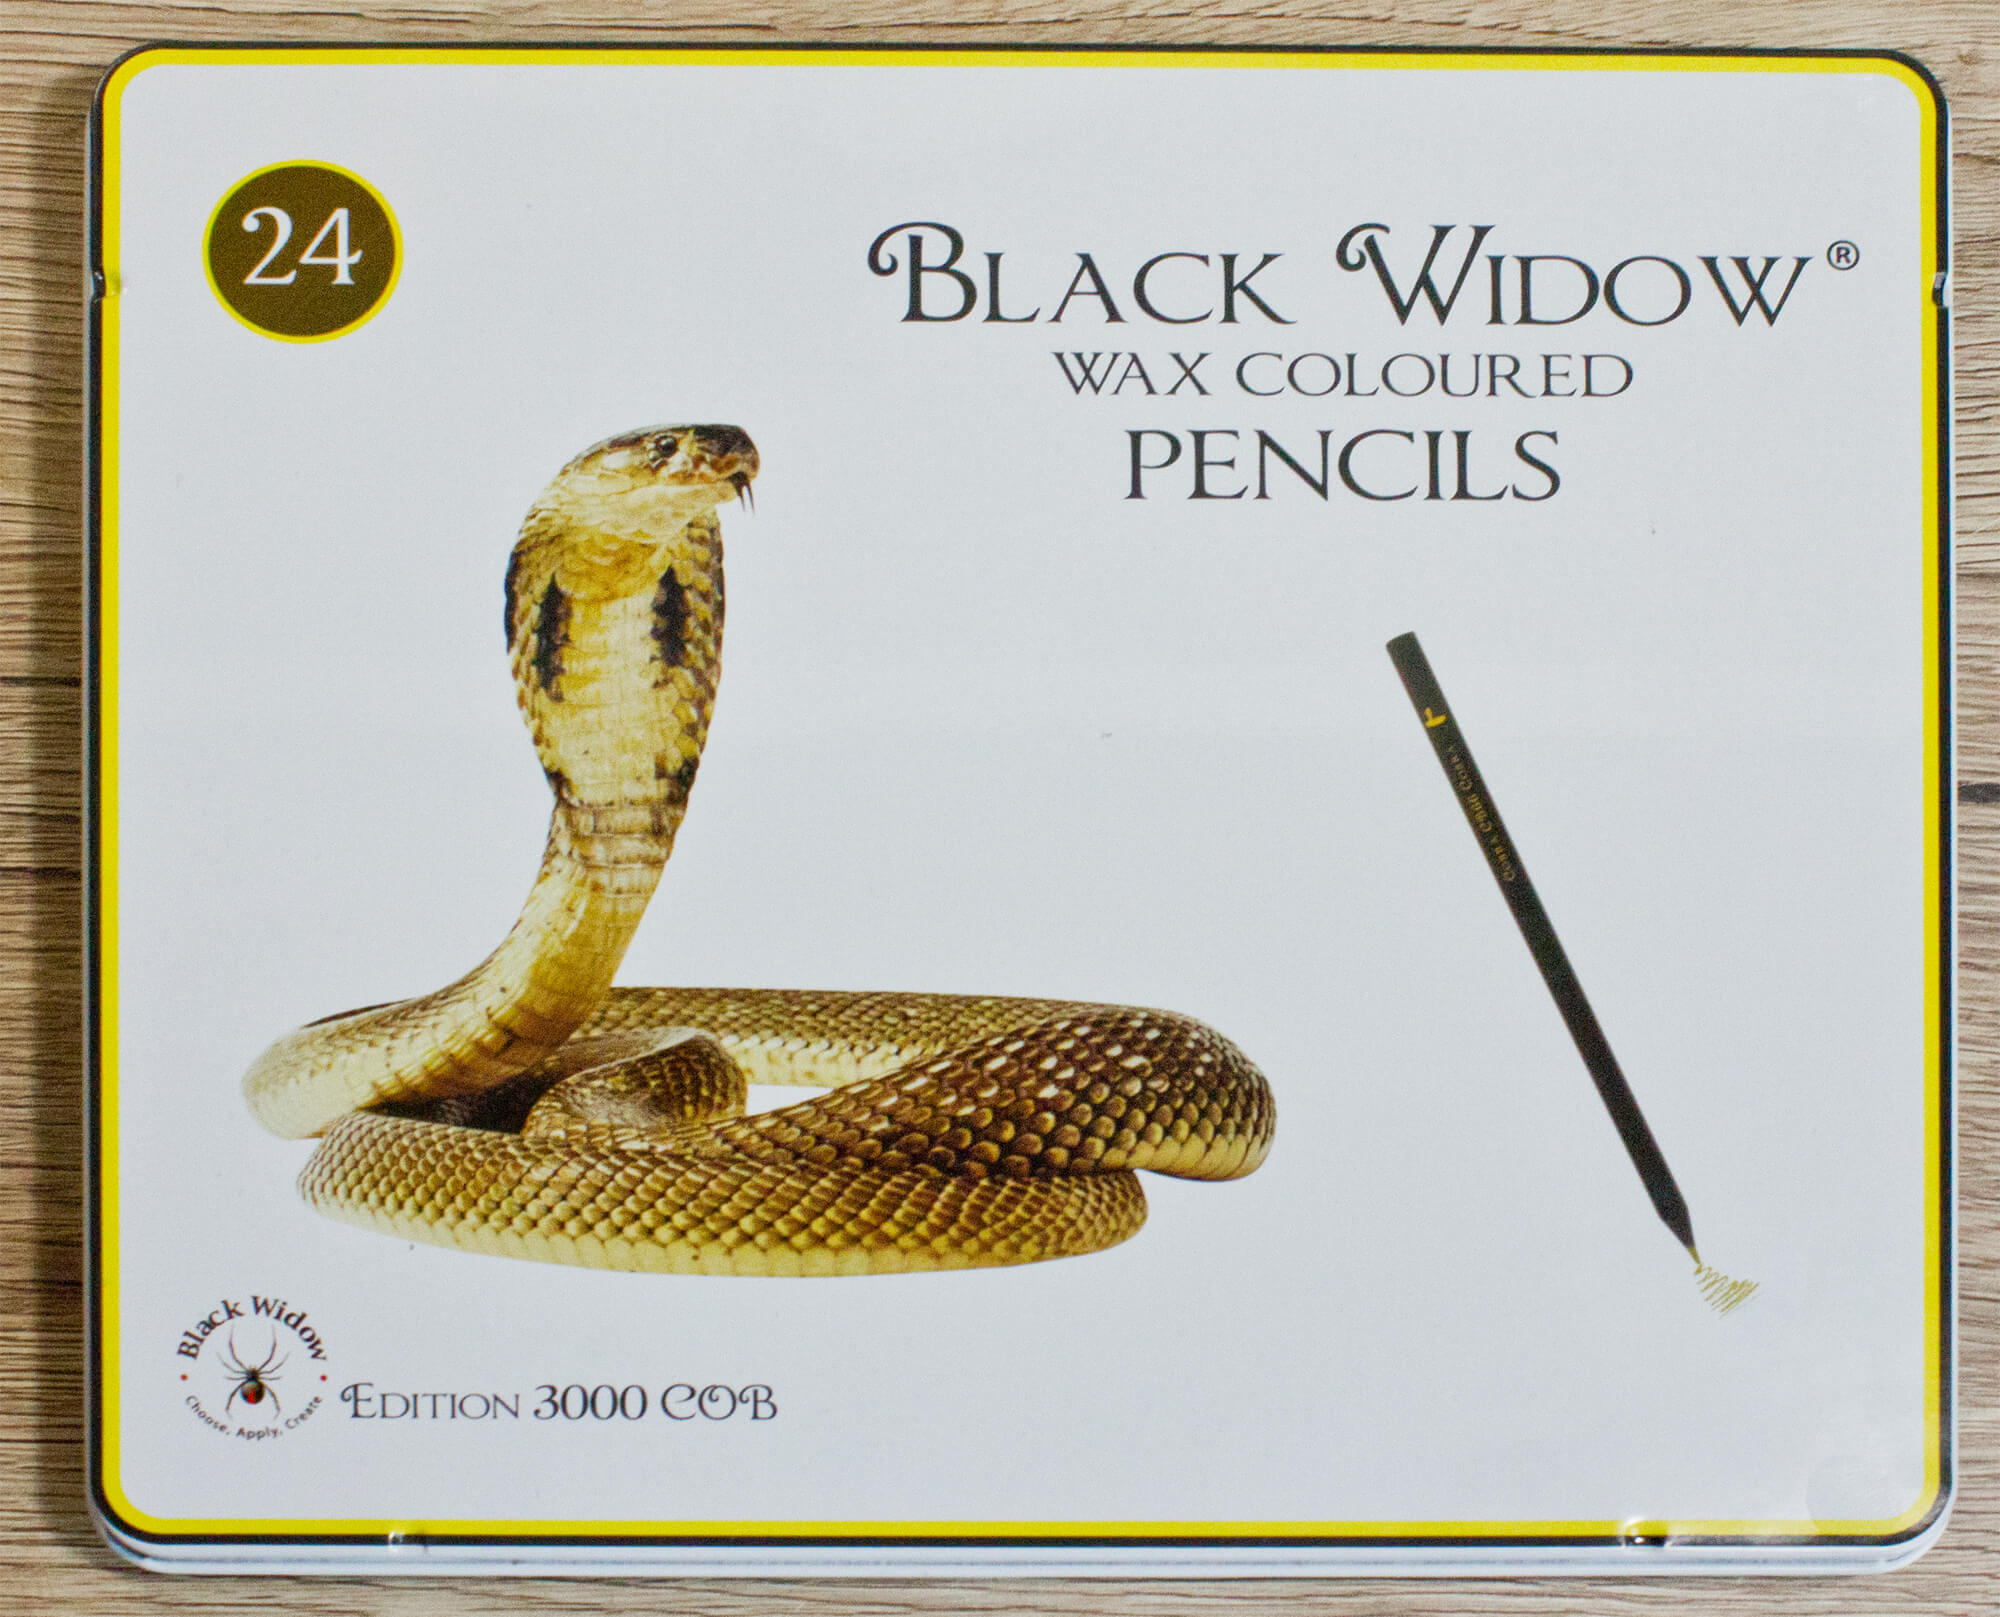 Black Widow wax coloured pencils Buntstifte in der 24er Set Dose